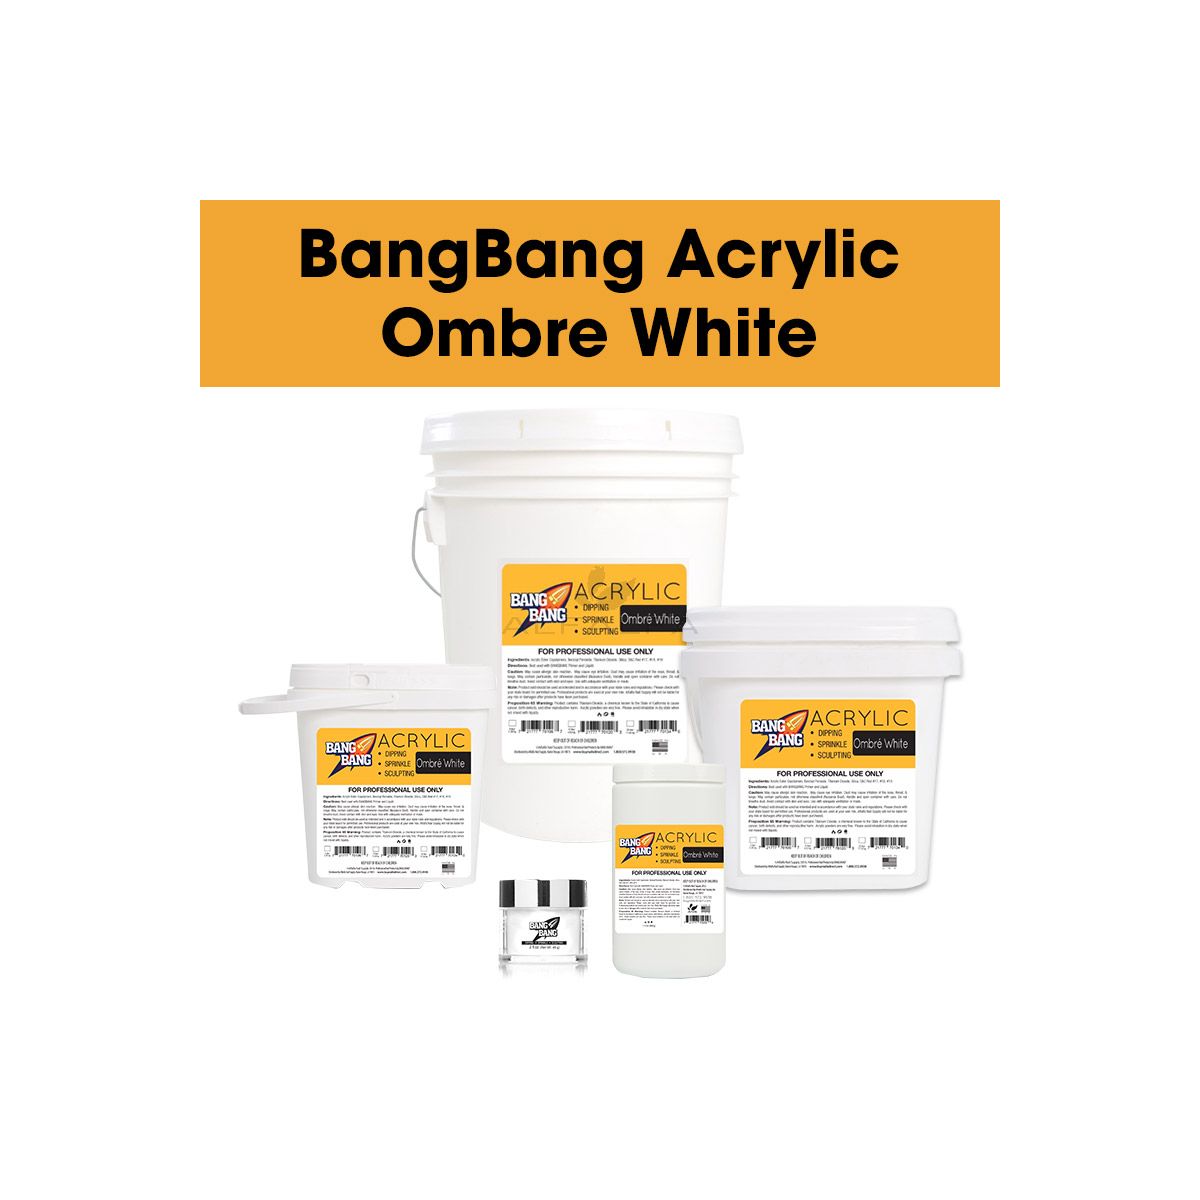 BangBang Acrylic Powder - Ombre White